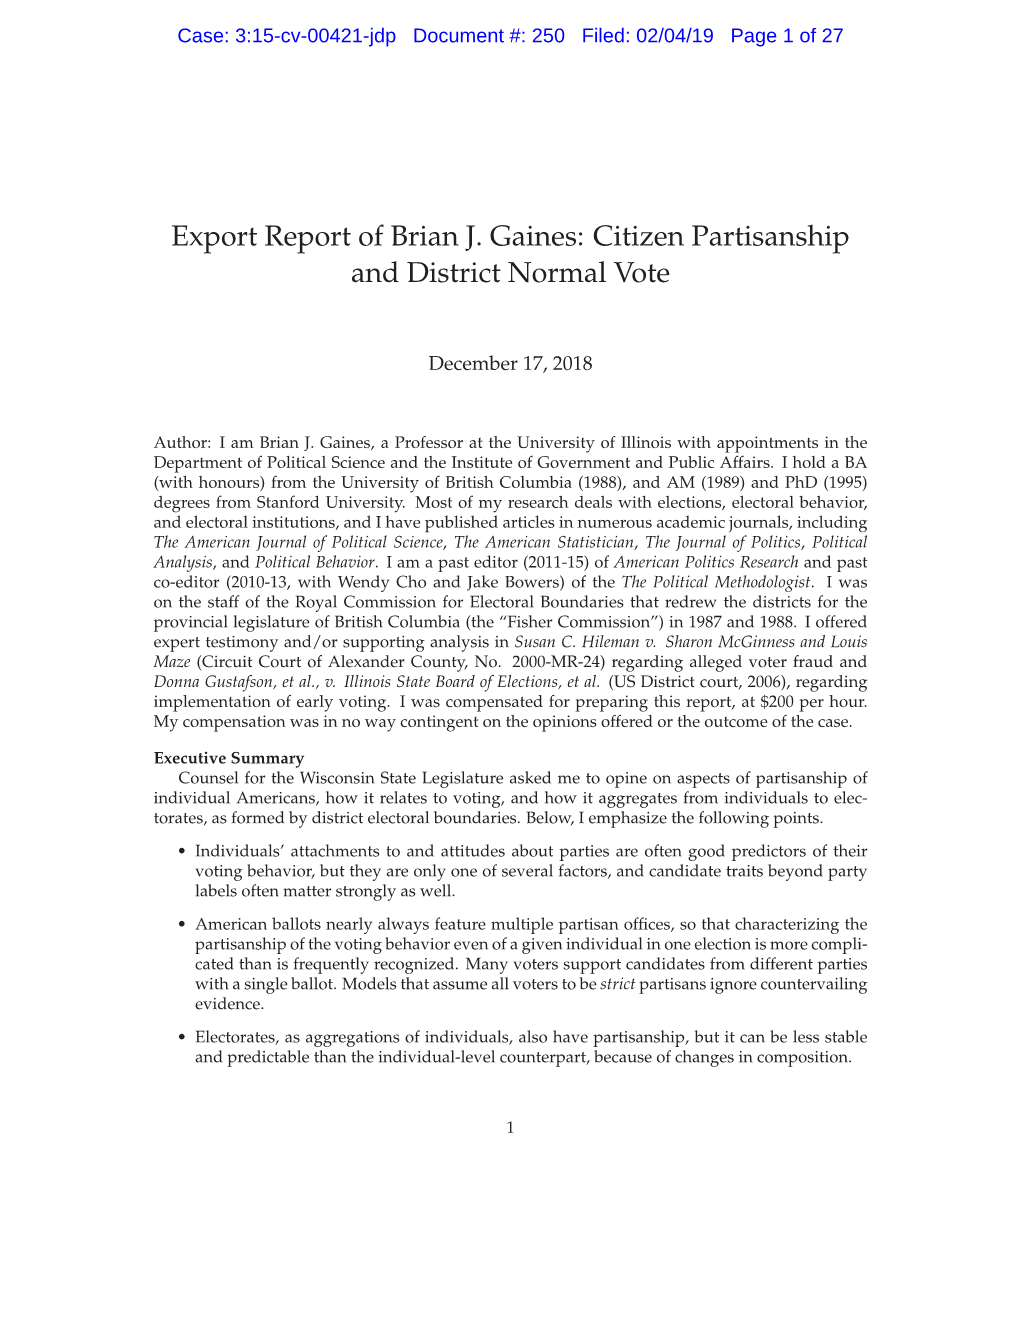 Expert Report of Brian Gaines